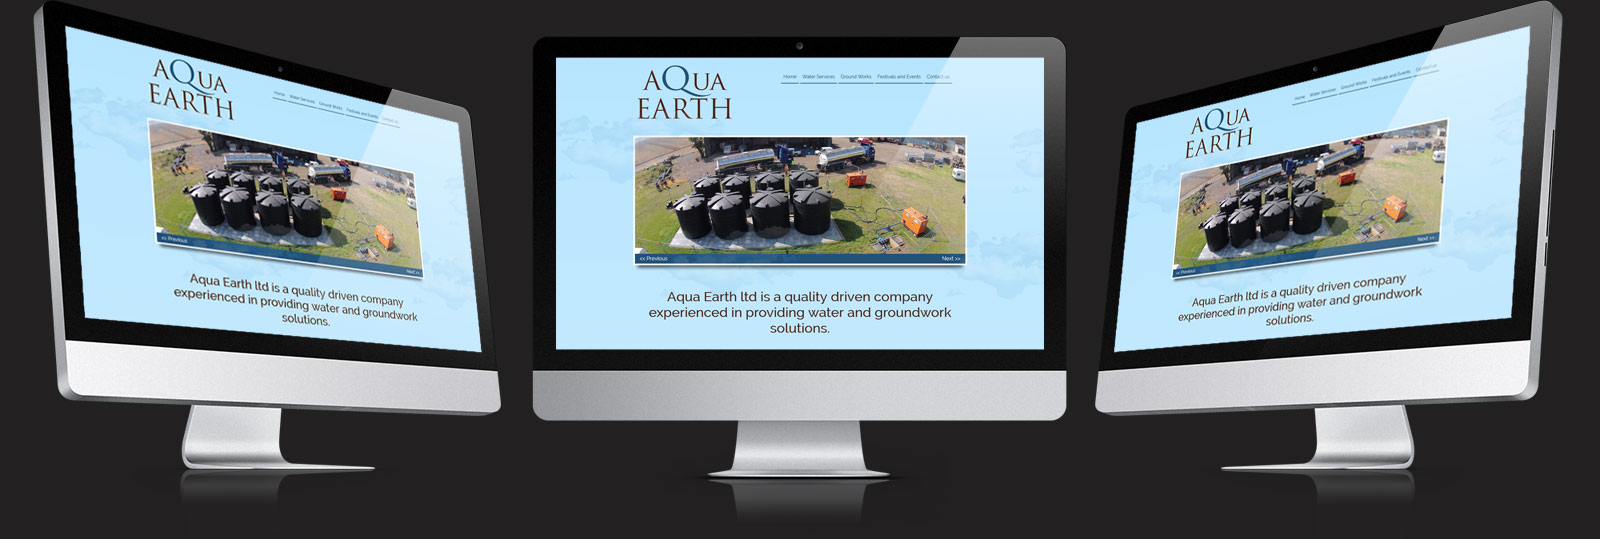 Stamford Web Design - Aqua Earth